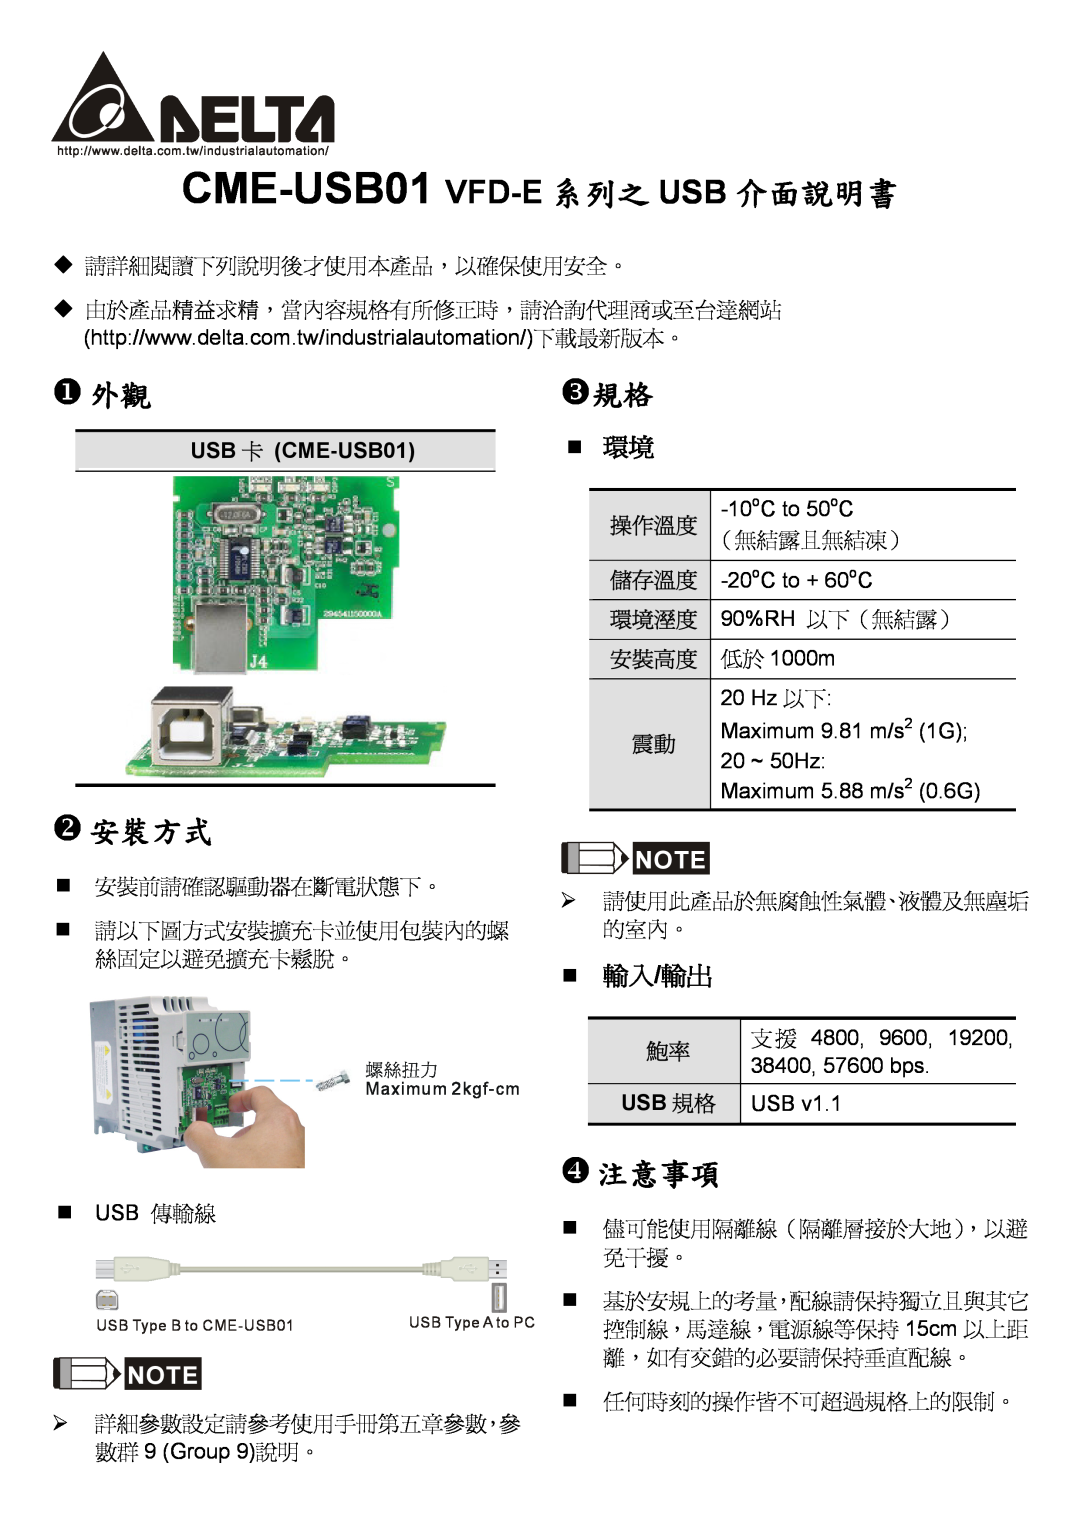 Delta Electronics USB 卡 CME-USB01, Usb 規格, CME-USB01 VFD-E 系列之 USB 介面說明書, X 外觀, Y 安裝方式, 注意事項, 輸入/輸出, 操作溫度, 儲存溫度, 環境溼度 